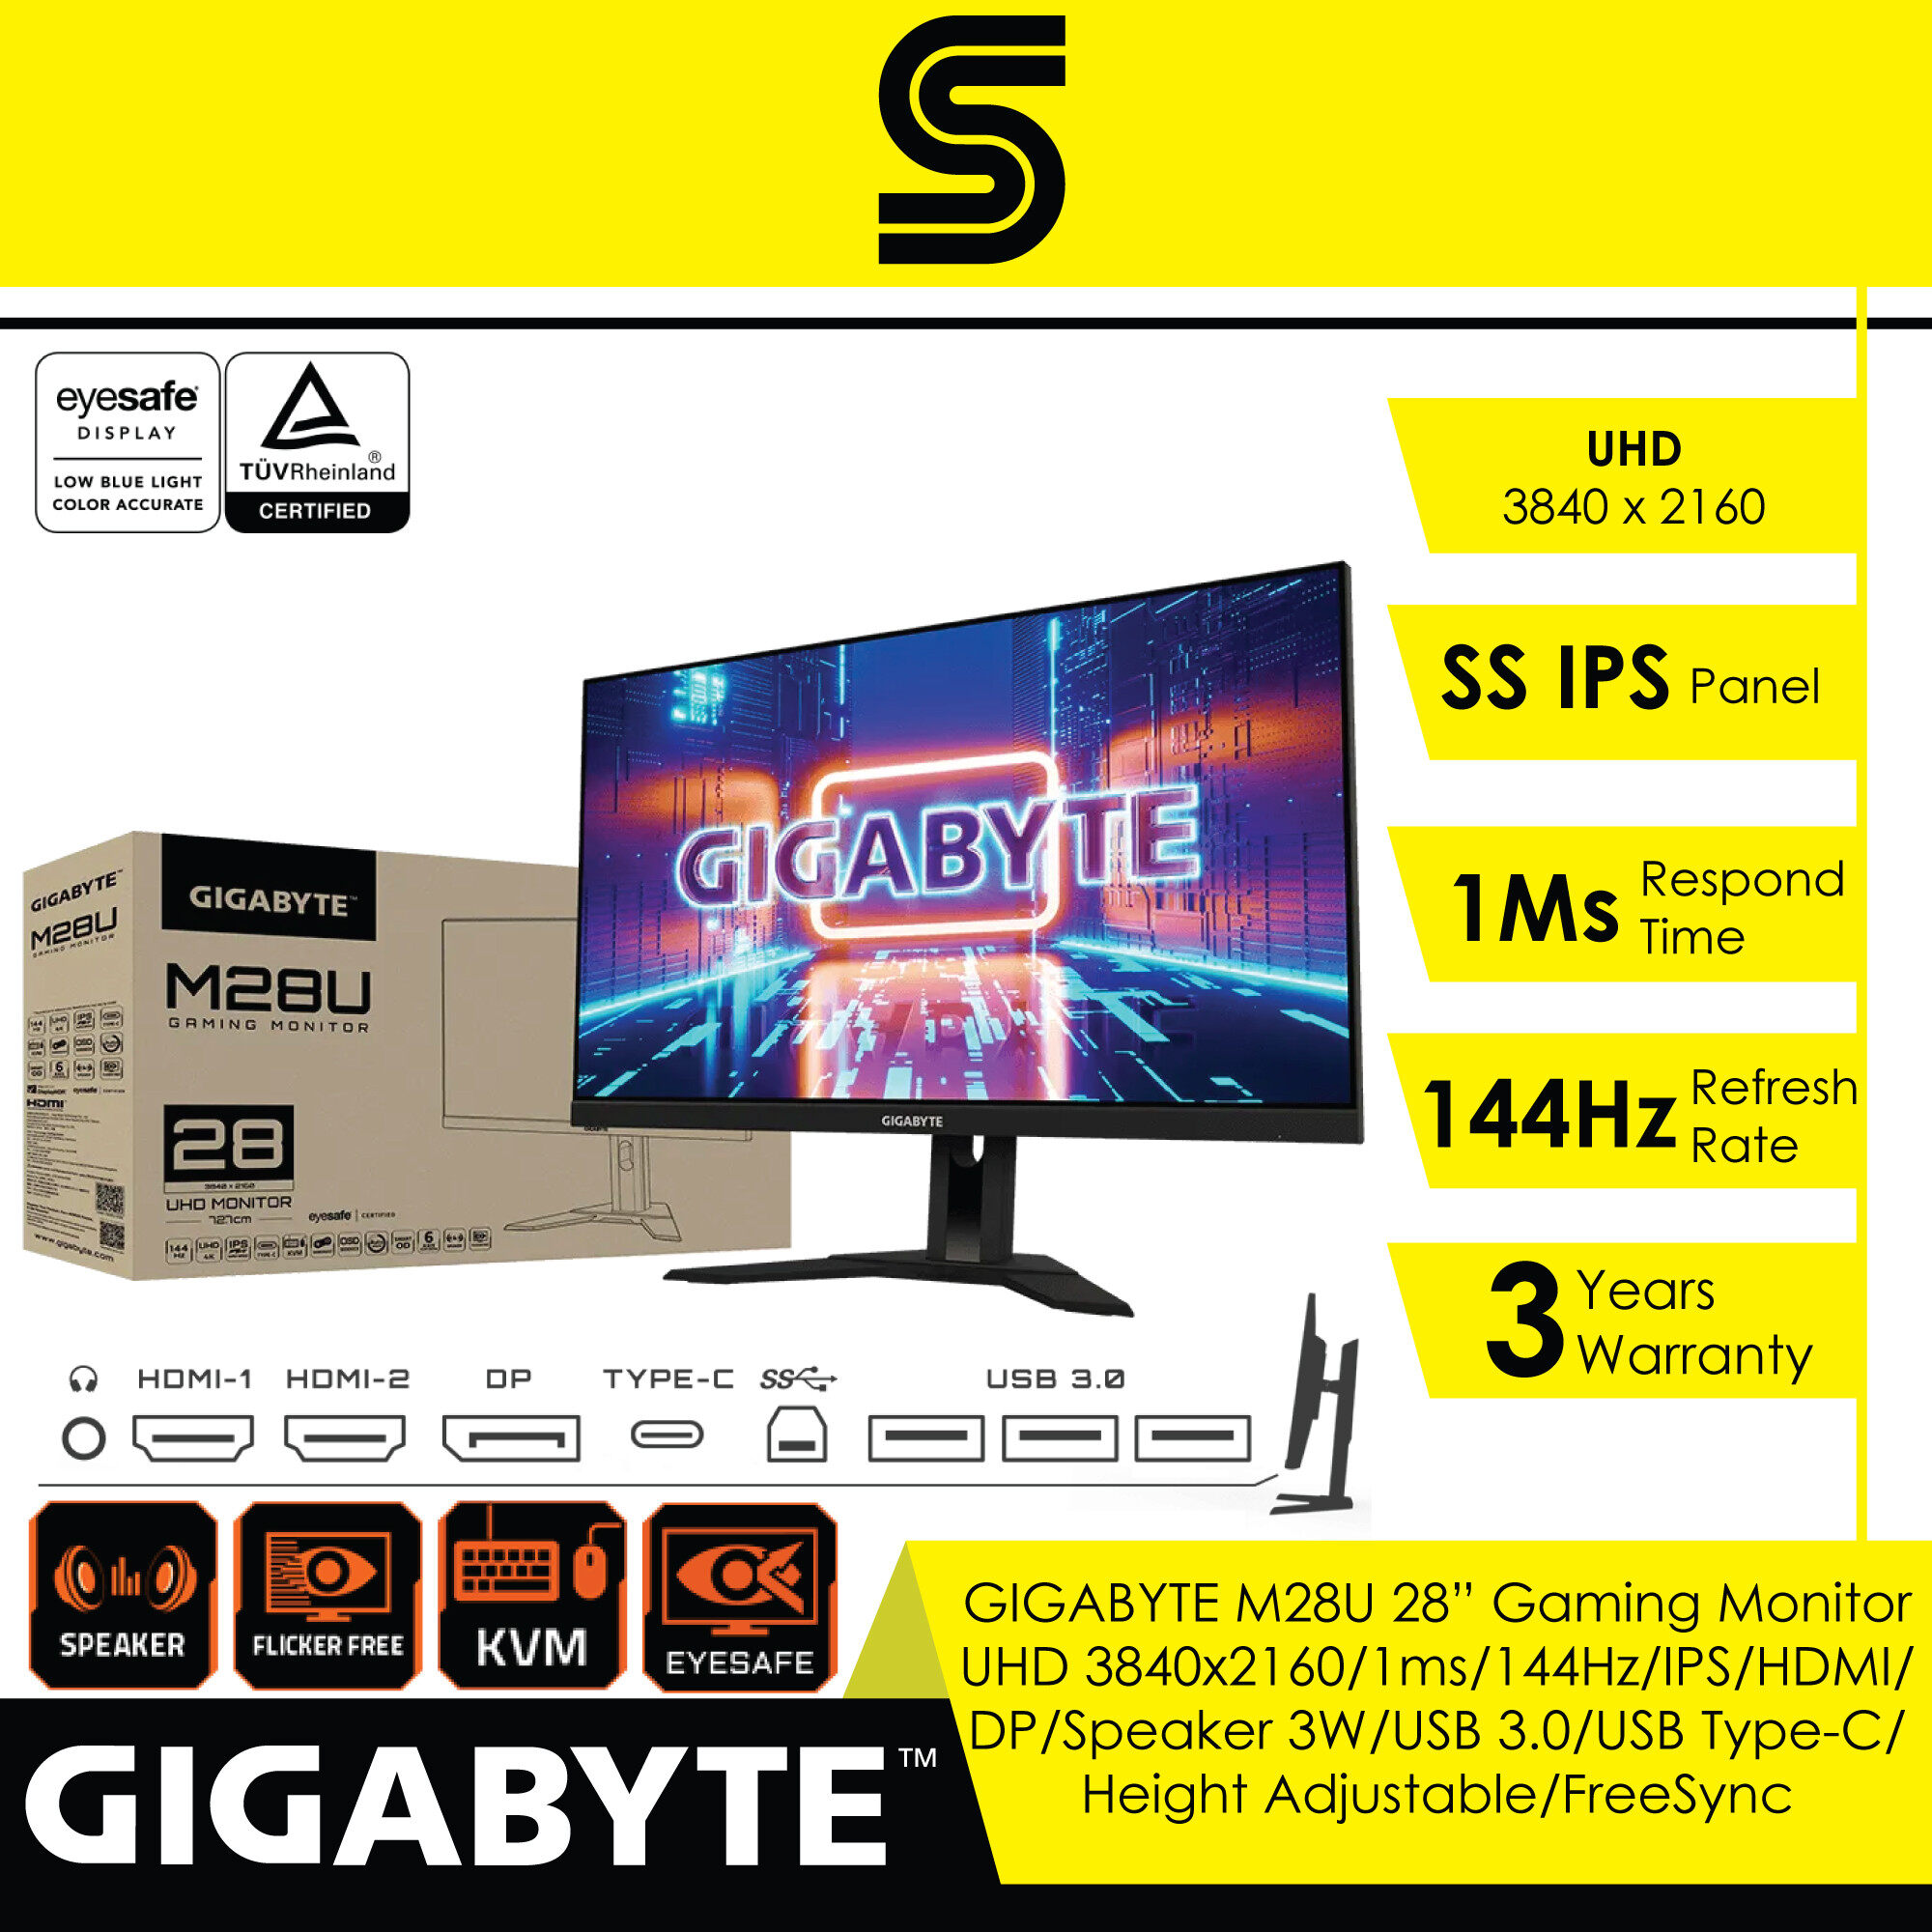 GIGABYTE M28U 28” Gaming Monitor UHD 3840x2160/1ms/144Hz/IPS/HDMI/DP/Speaker 3W/USB 3.0/USB Type-C/Height Adjustable/FreeSync